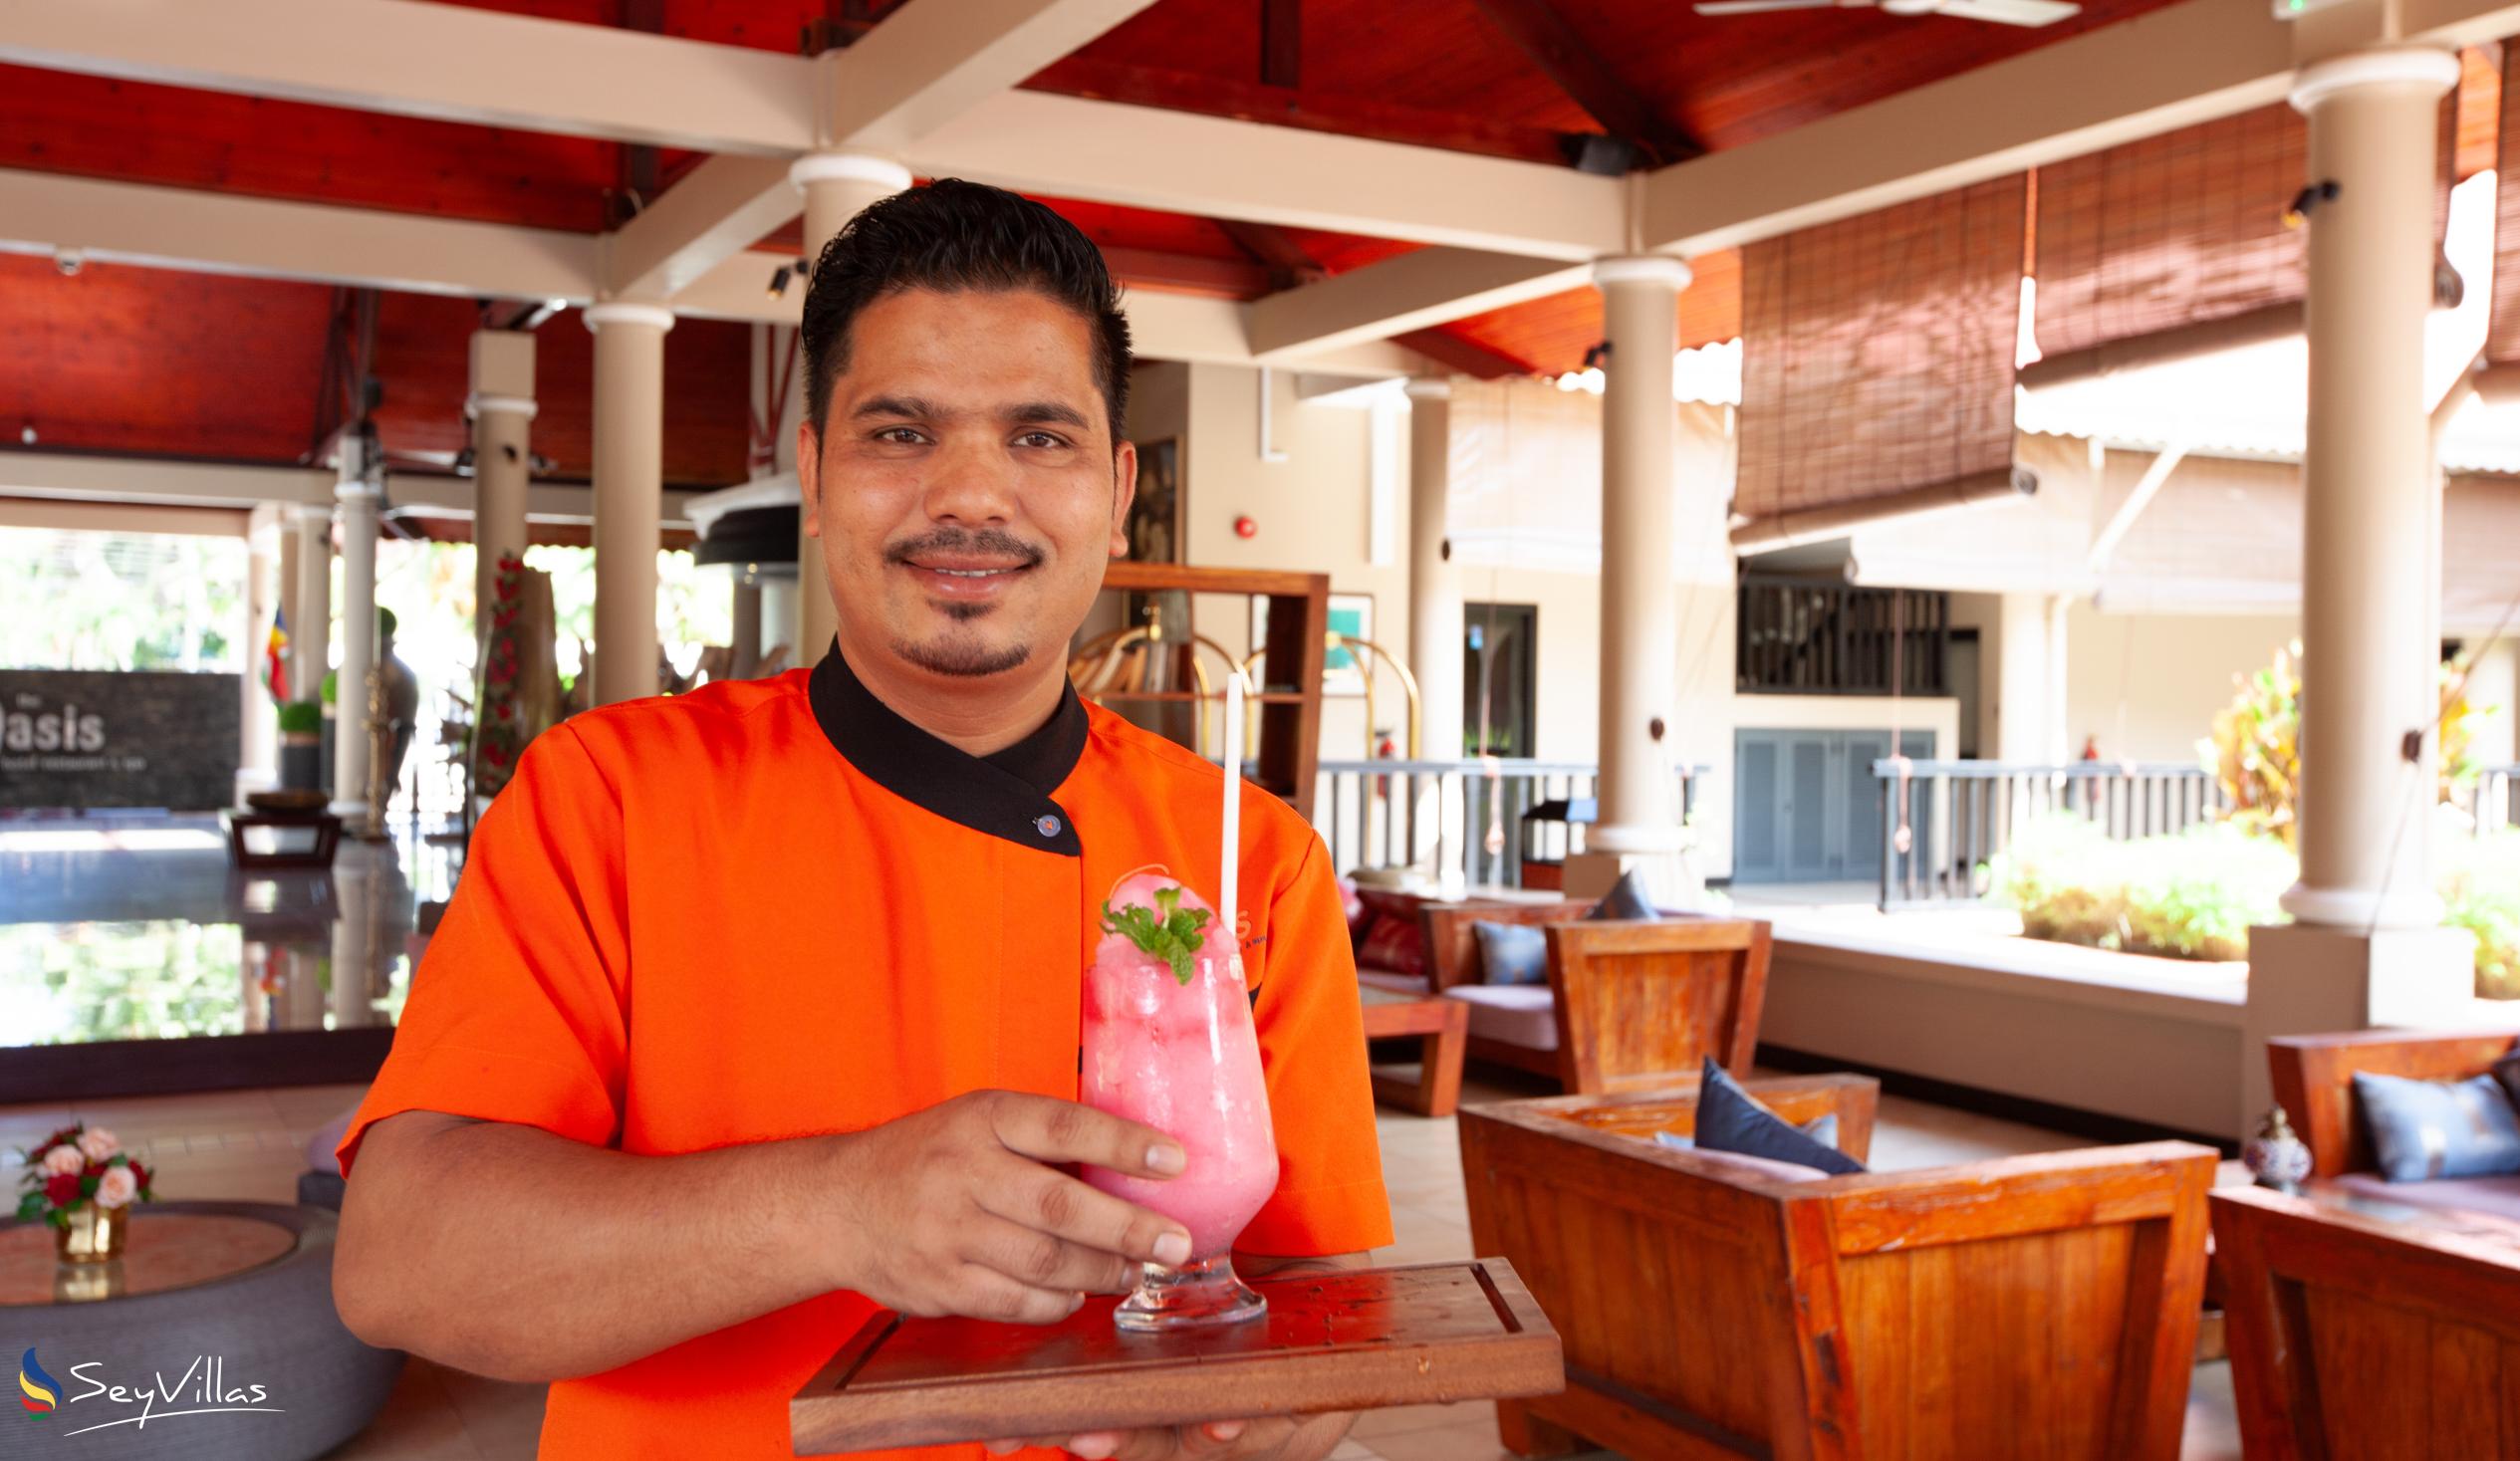 Photo 14: Oasis Hotel, Restaurant & Spa - Indoor area - Praslin (Seychelles)